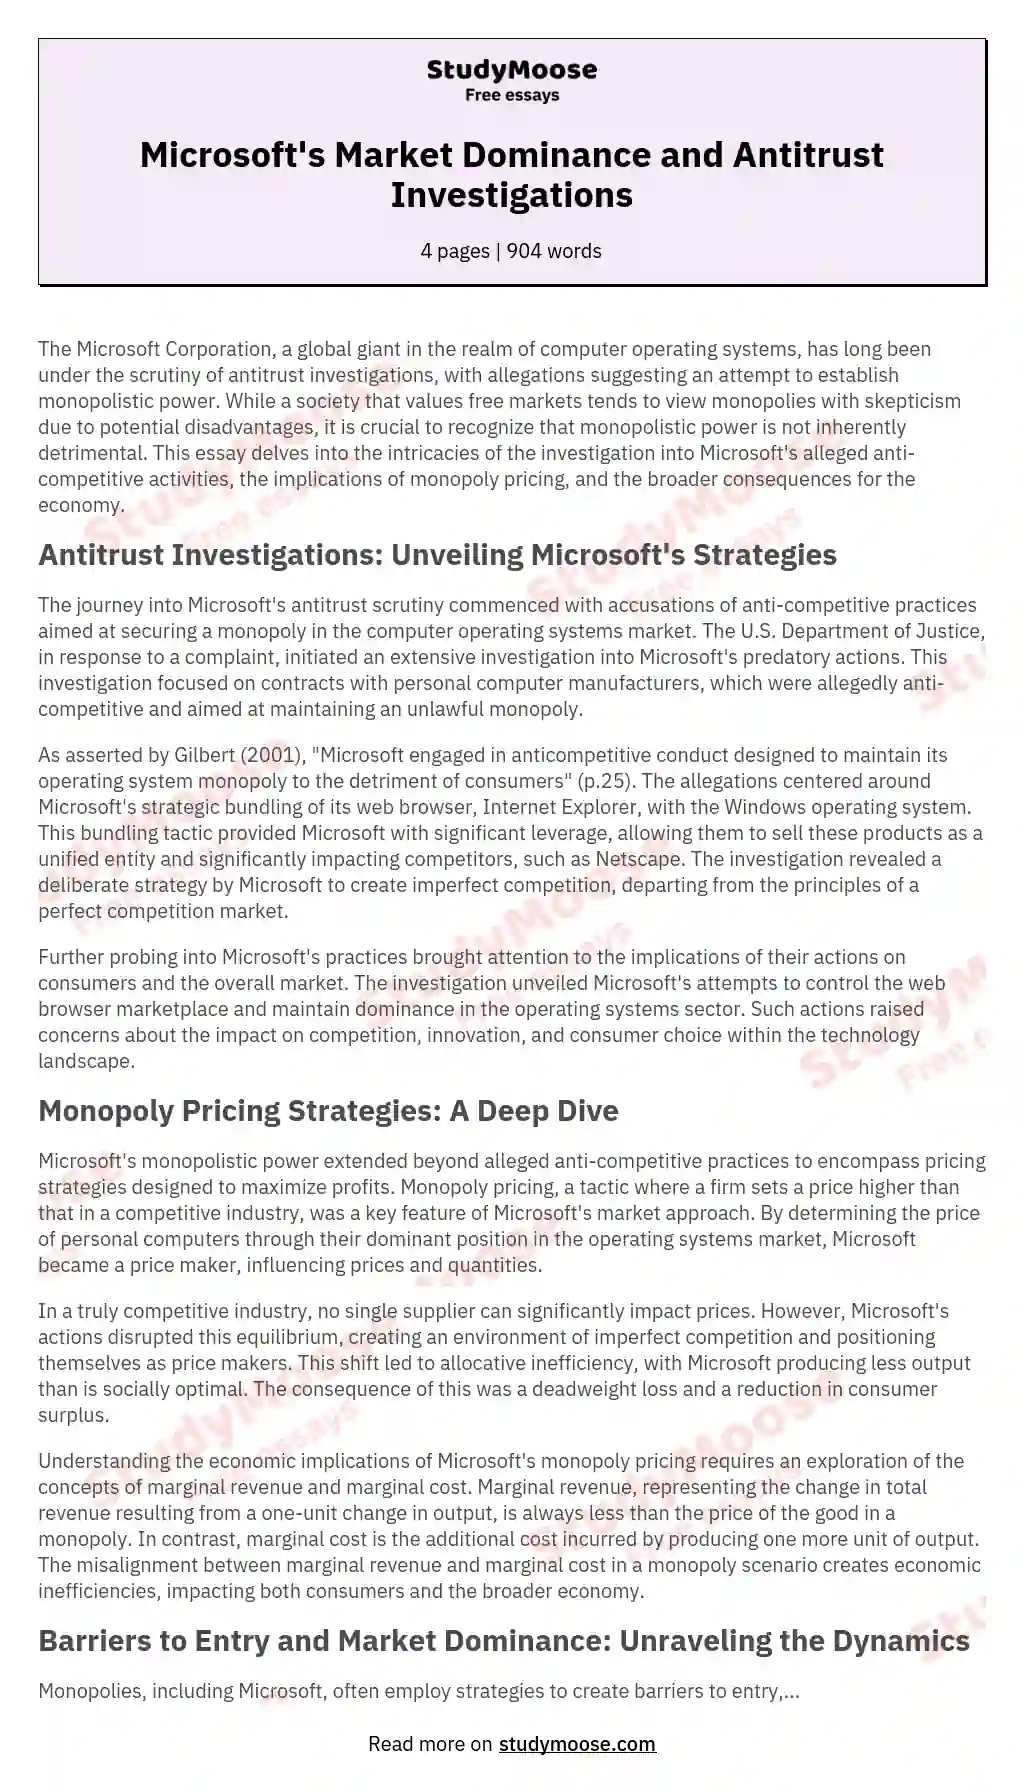 Microsoft's Market Dominance and Antitrust Investigations essay